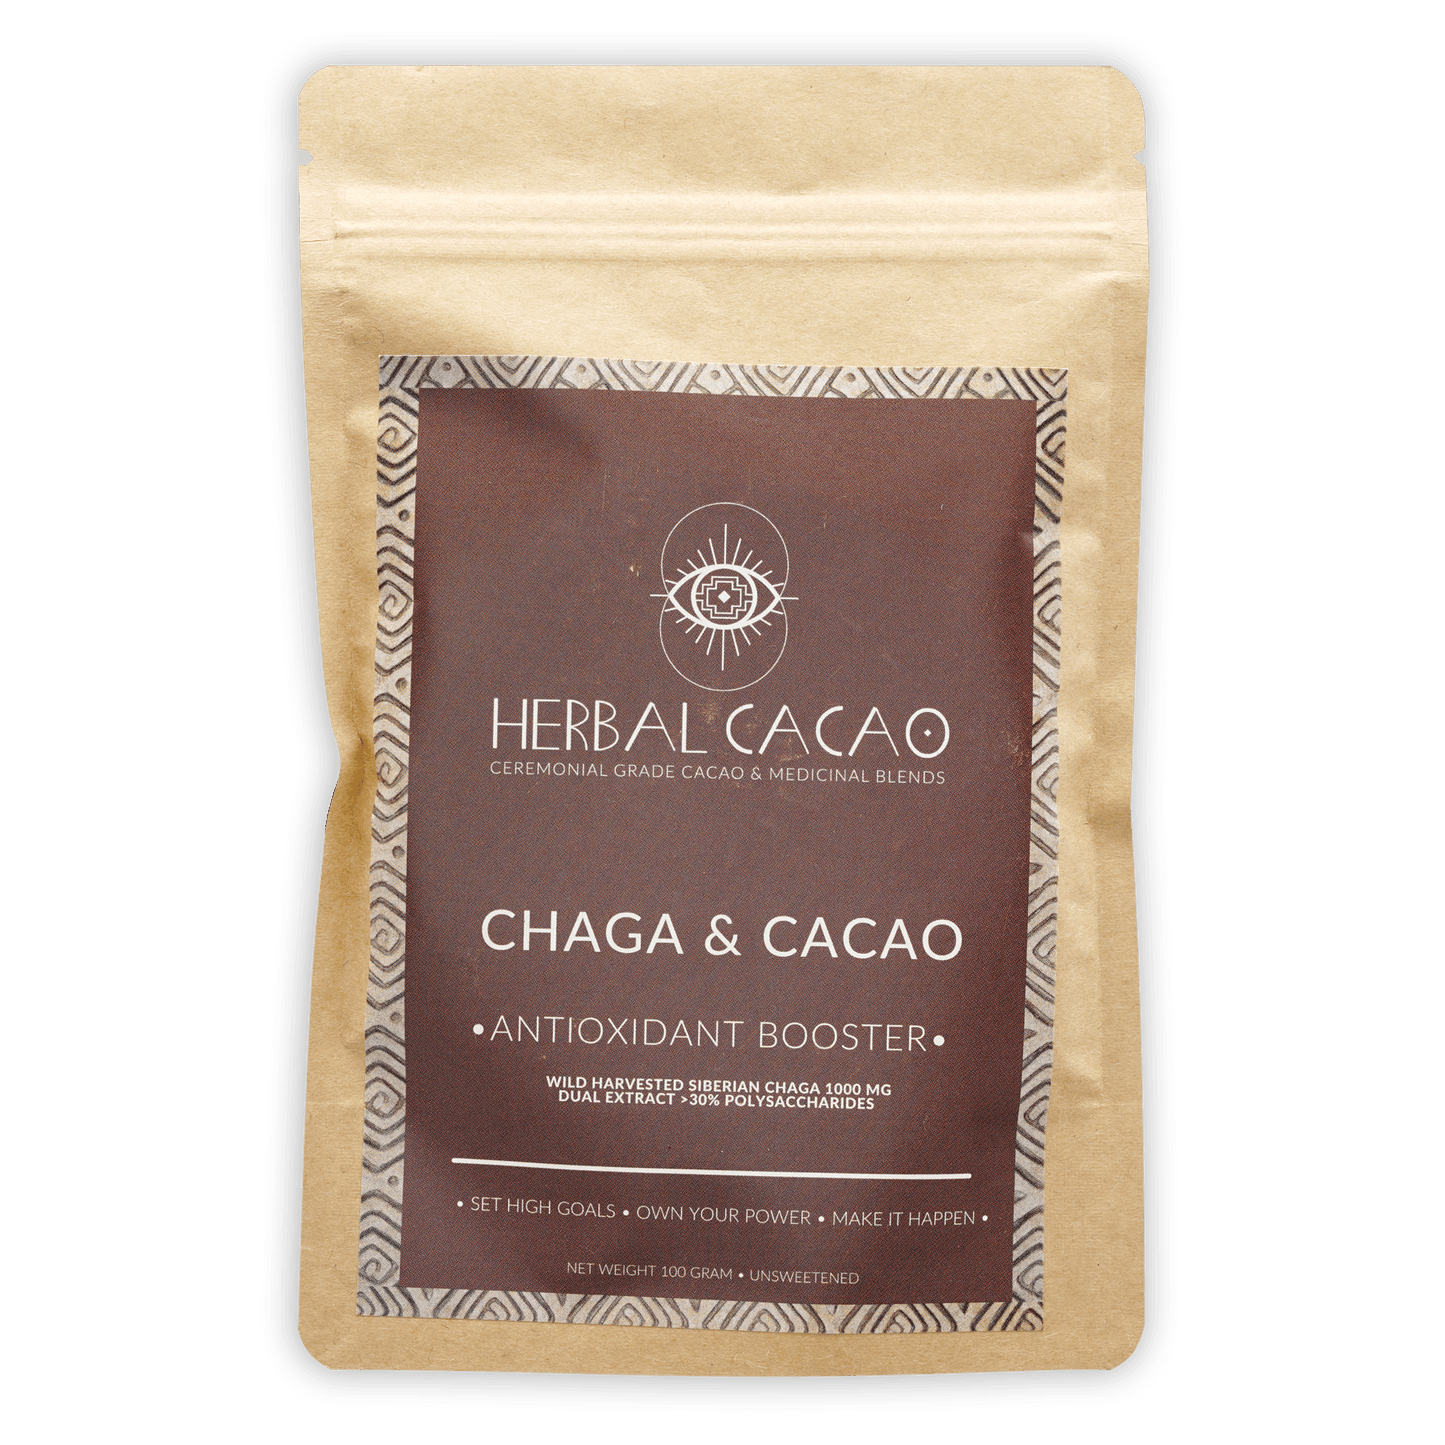 Herbal Cacao Ceremonial Cacao w/ Chaga